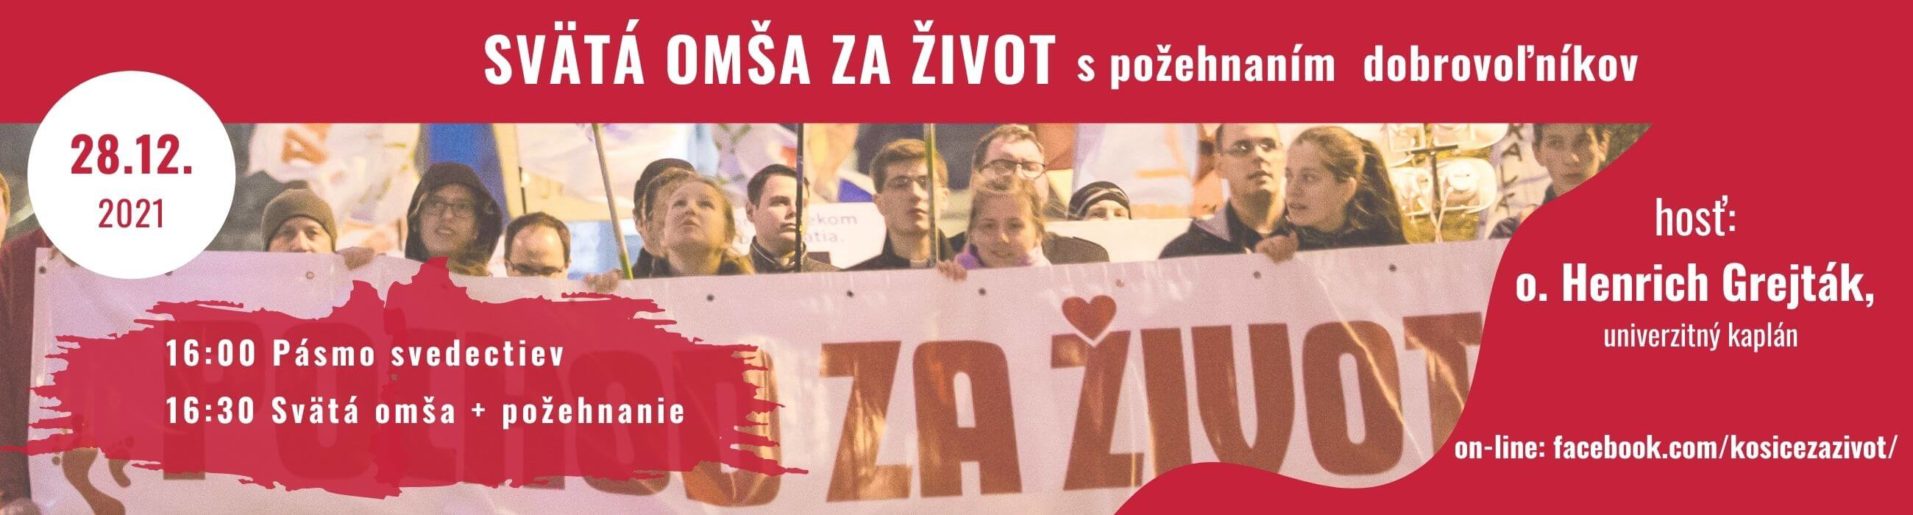 banner svätá omša (8) (1)